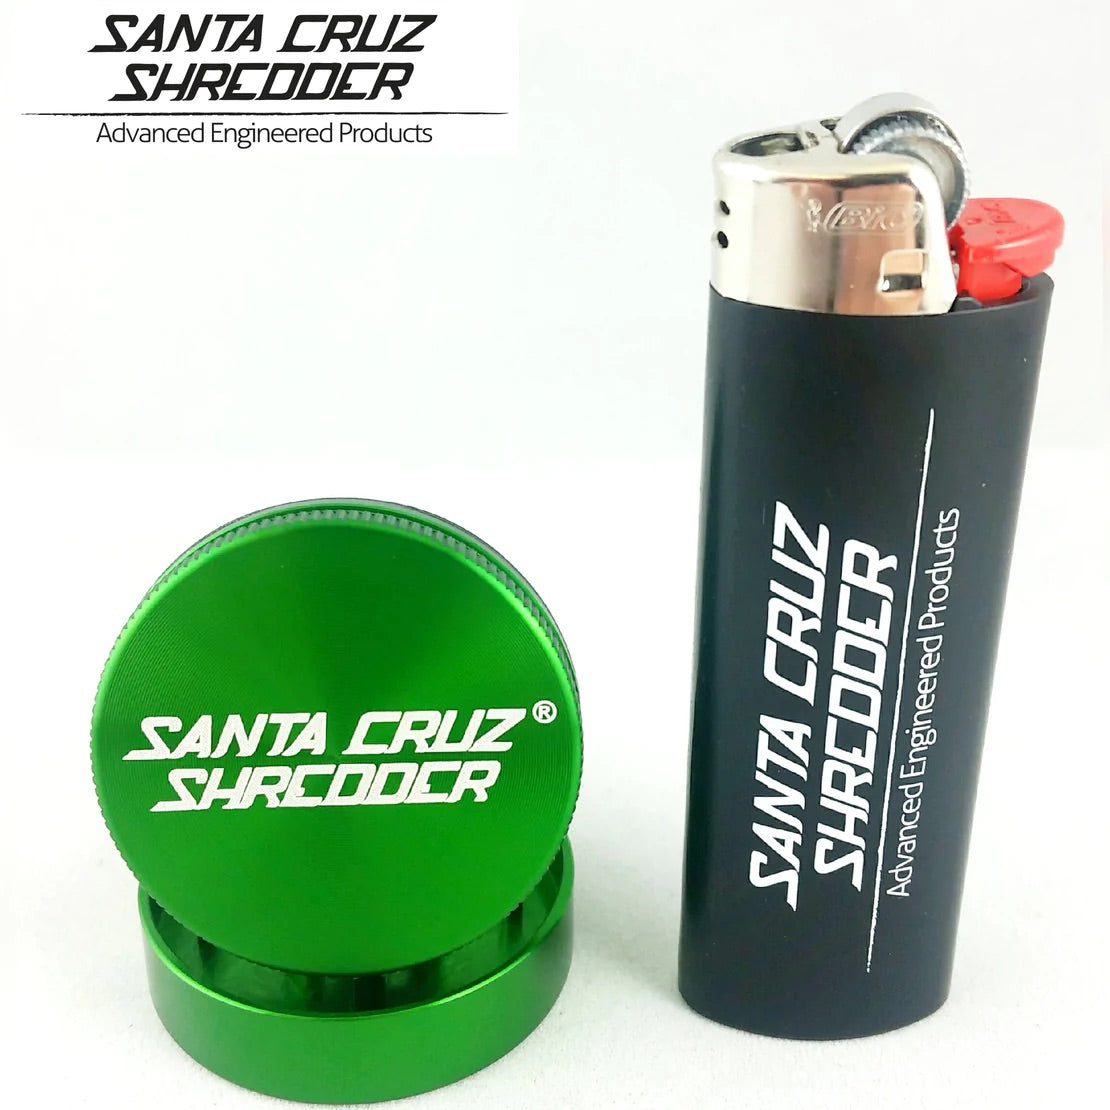 Santa Cruz Shredder Small 2pc Grinder